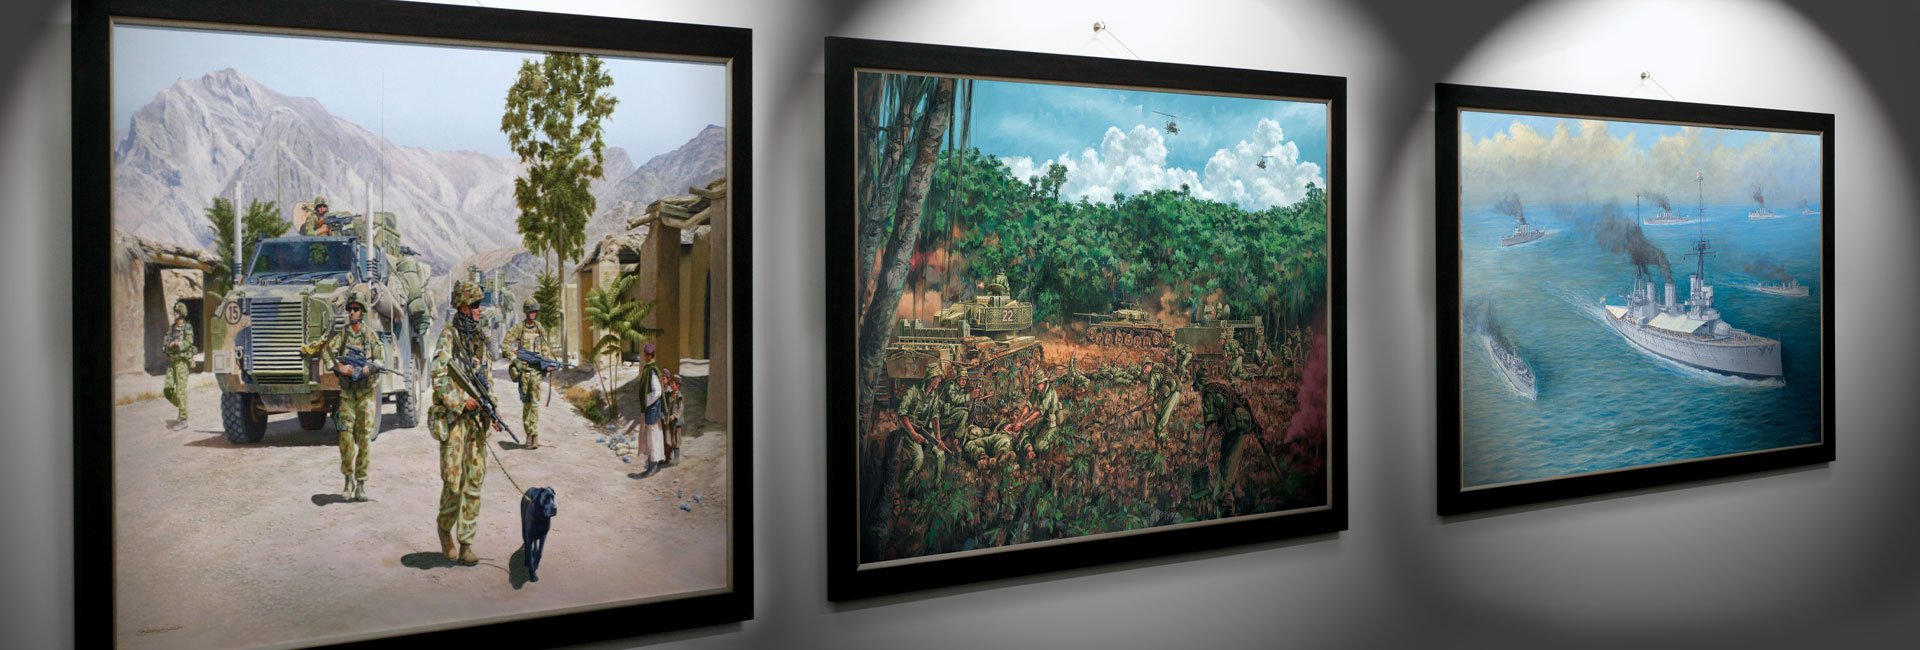 Military Artwork in Gallery